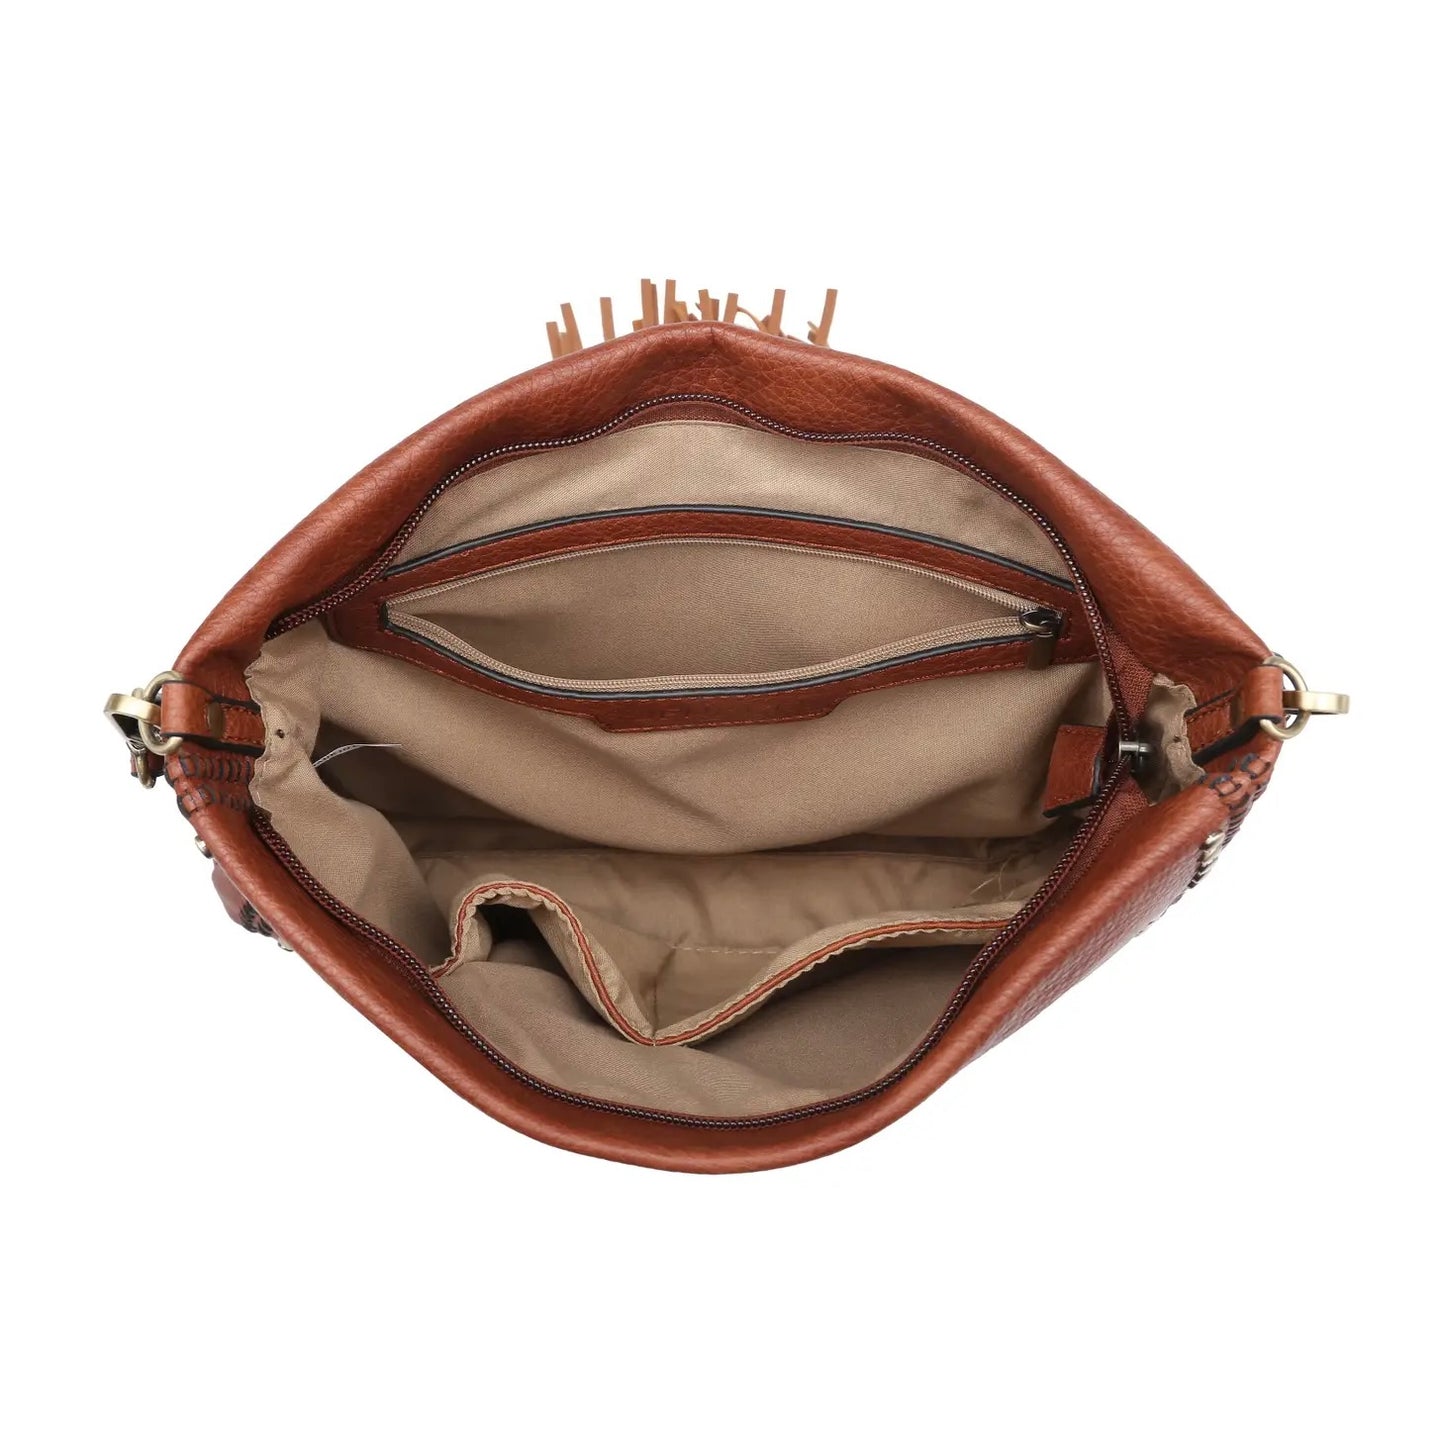 Inside of brown crossbody purse